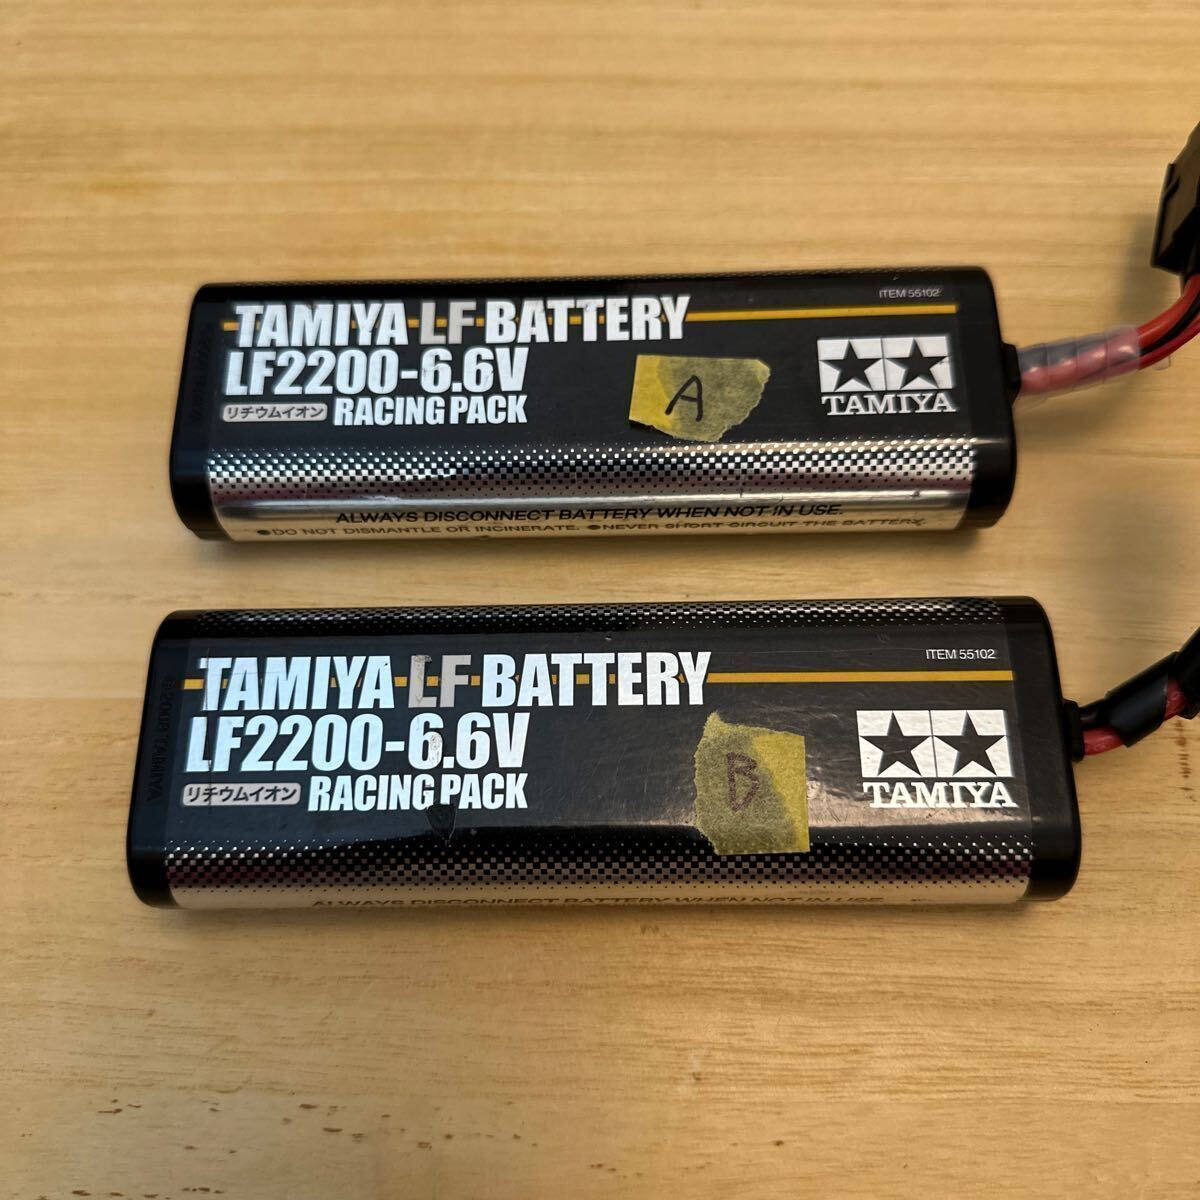 * Tamiya life battery LF2200 6.6V LF battery tami tea re racing pack tamiglaTAMIYA 2 ps Tamiya *